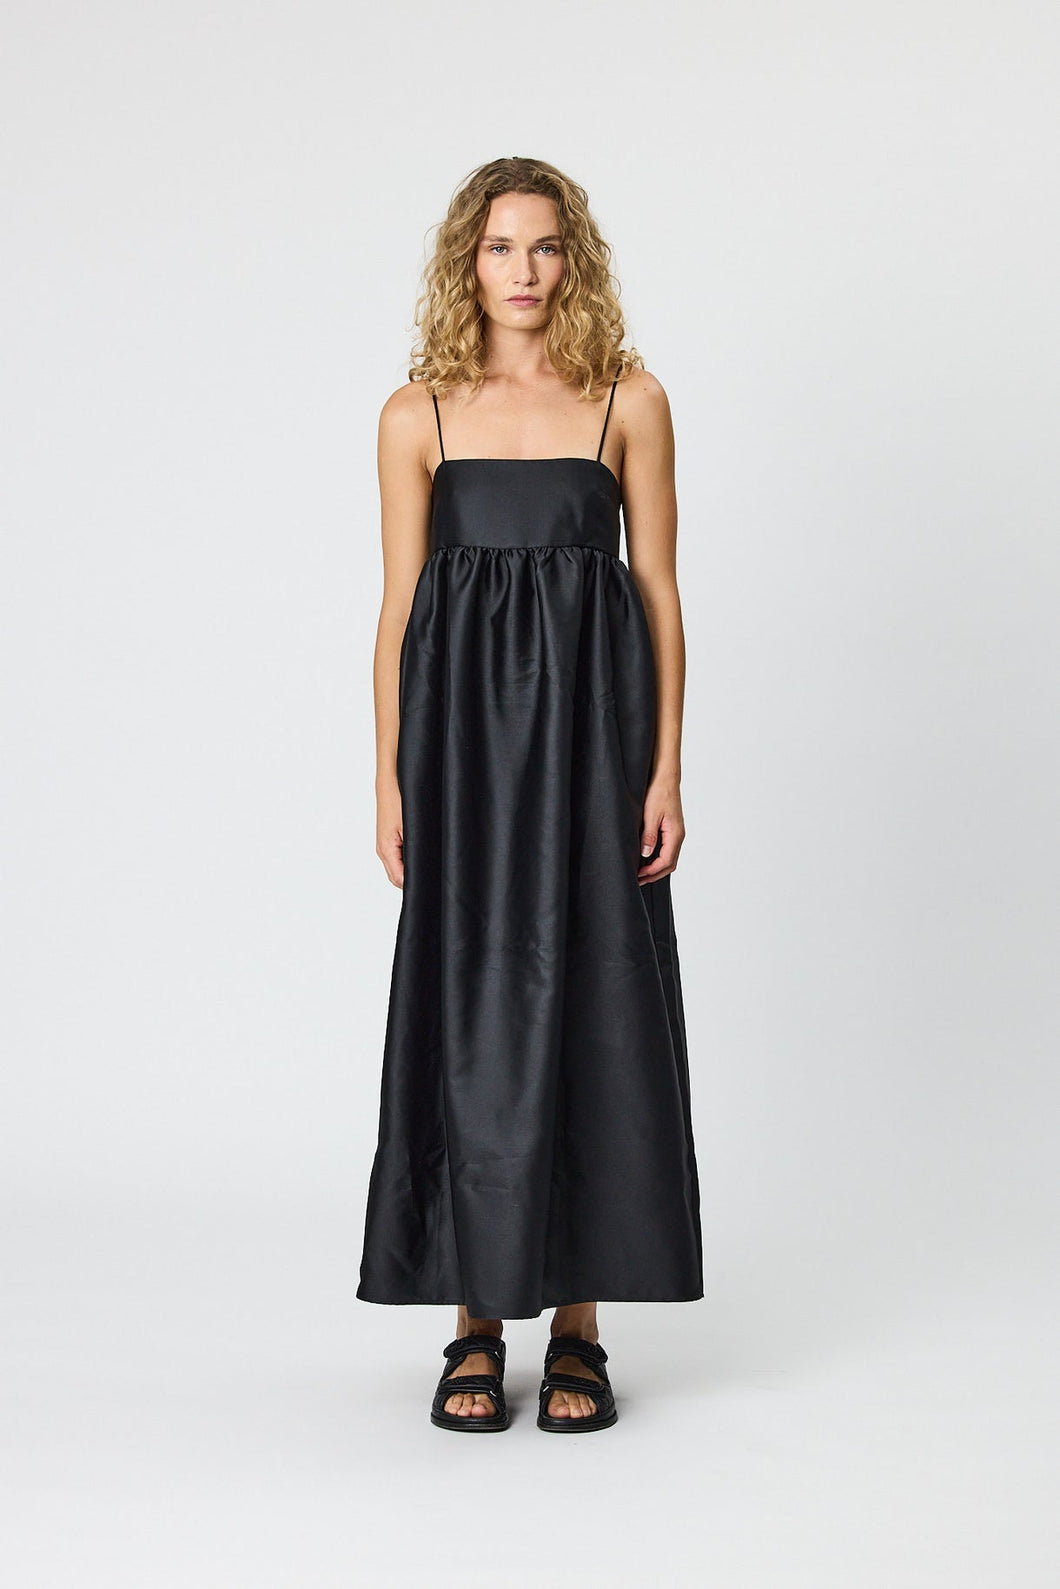 Sydney Dress | Black